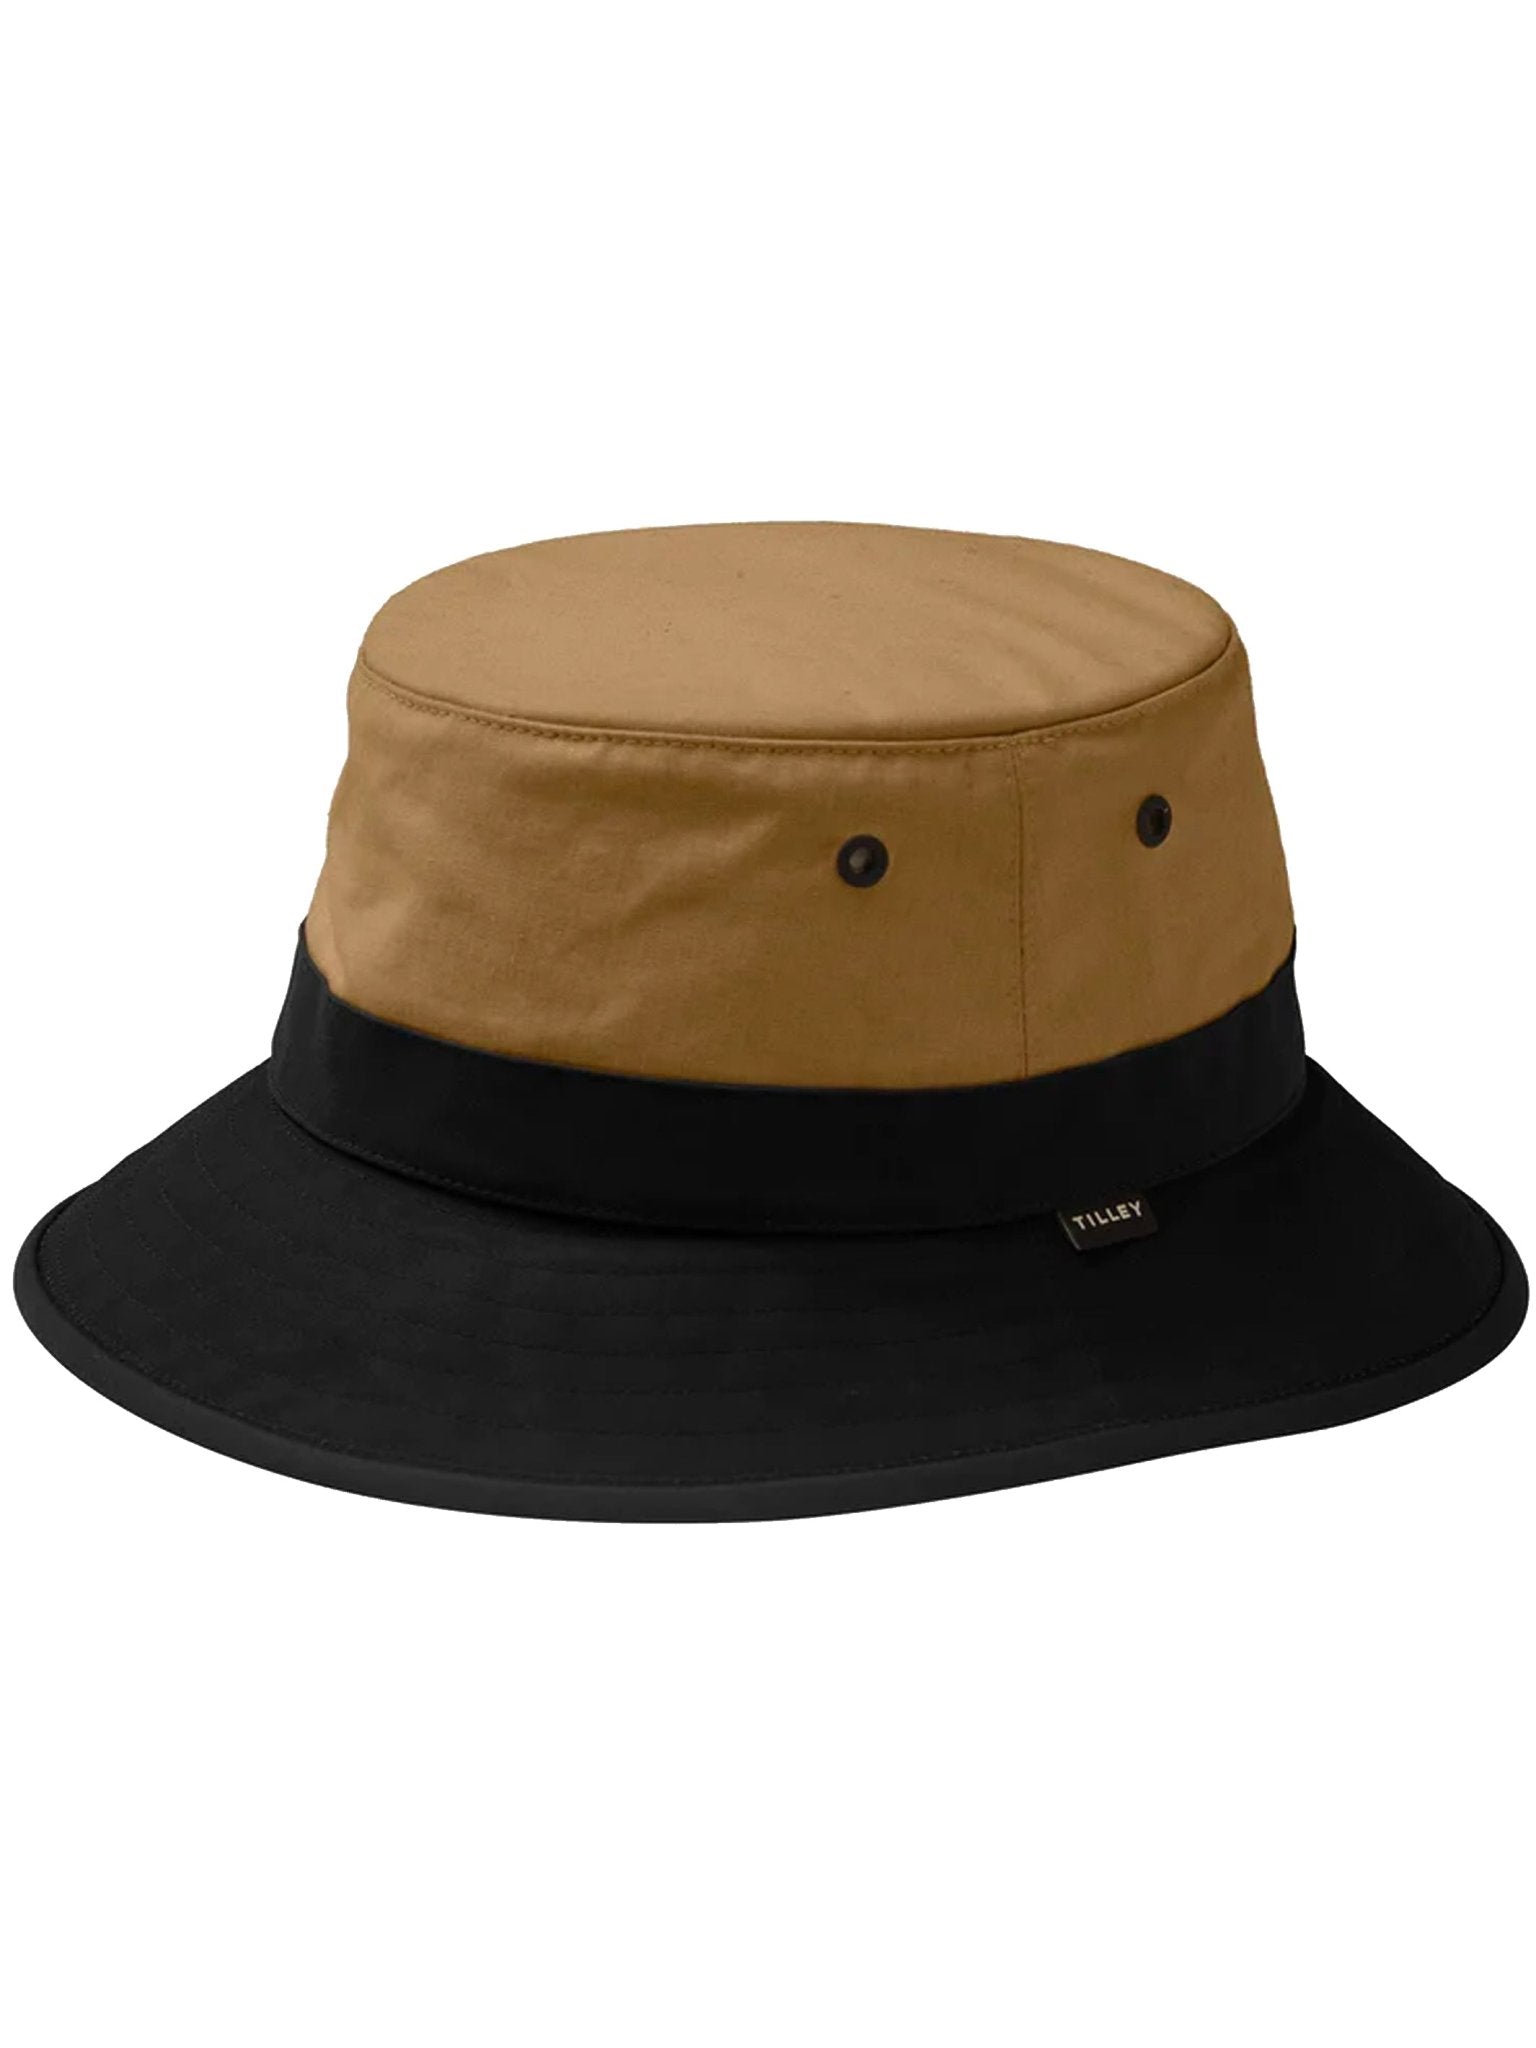 4elementsclothingTilleyTilley - Block Coloured Waxed Cotton Bucket Hat / Tilley Sun hatHats